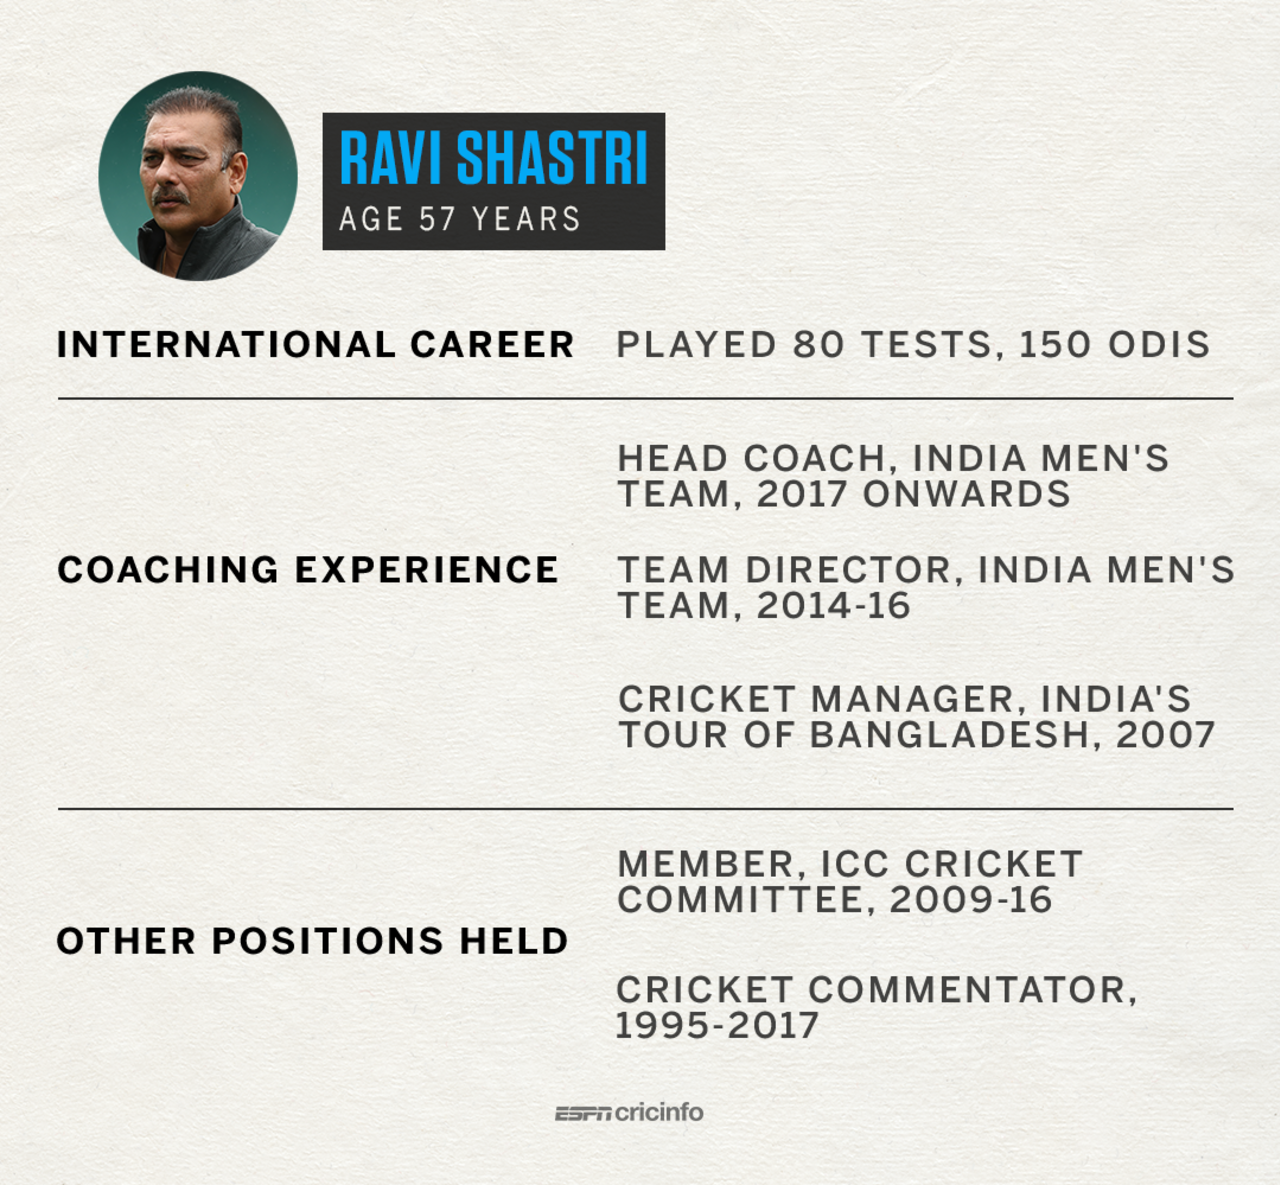 Ravi Shastri's coaching CV